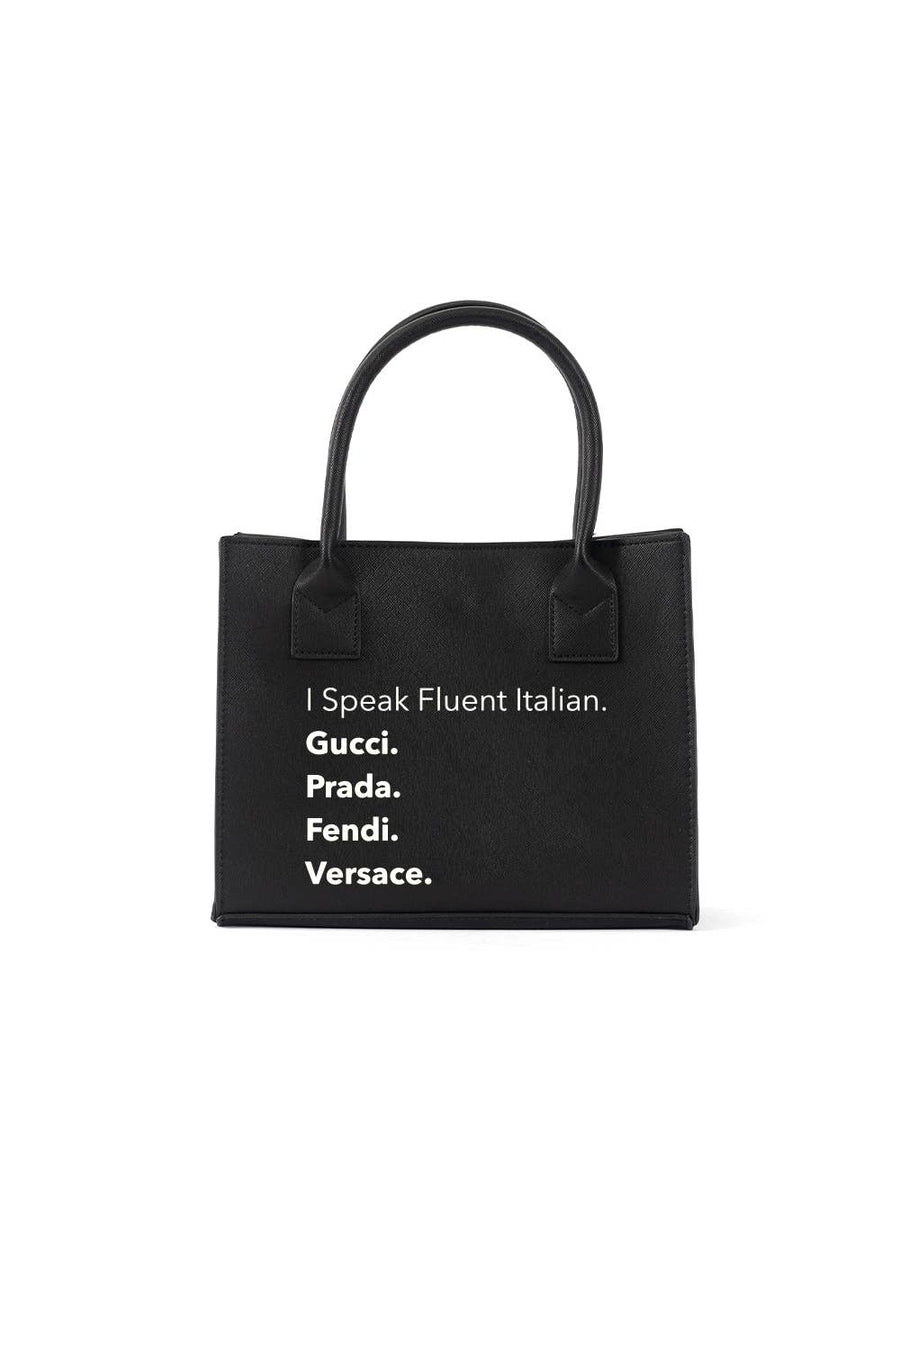 I Speak Fluent Italian - MINI Tote - Black